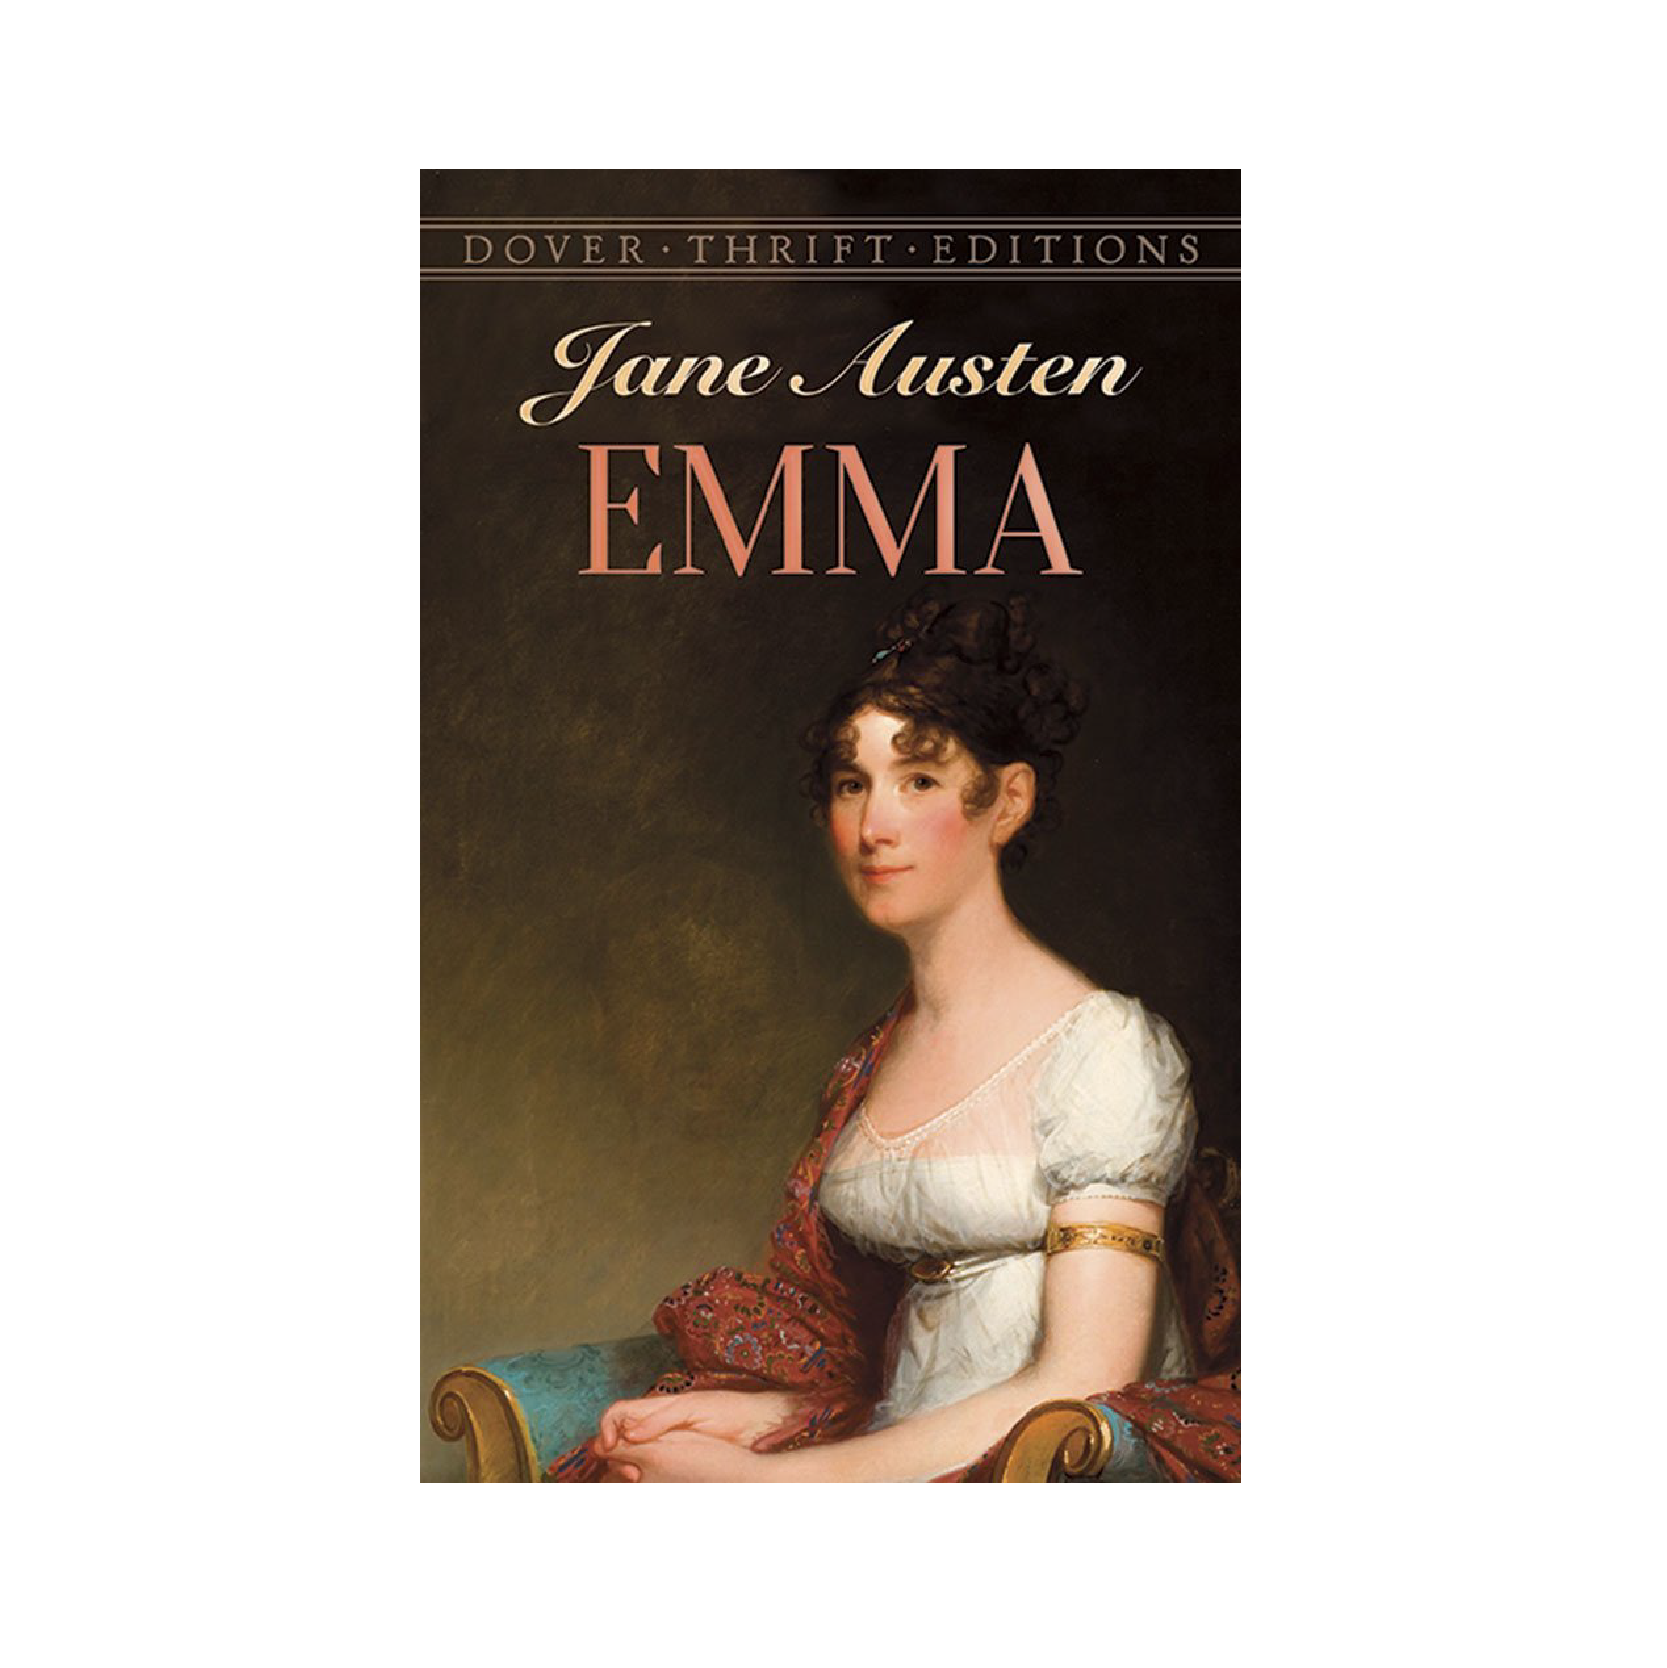 “Emma” by Jane Austen